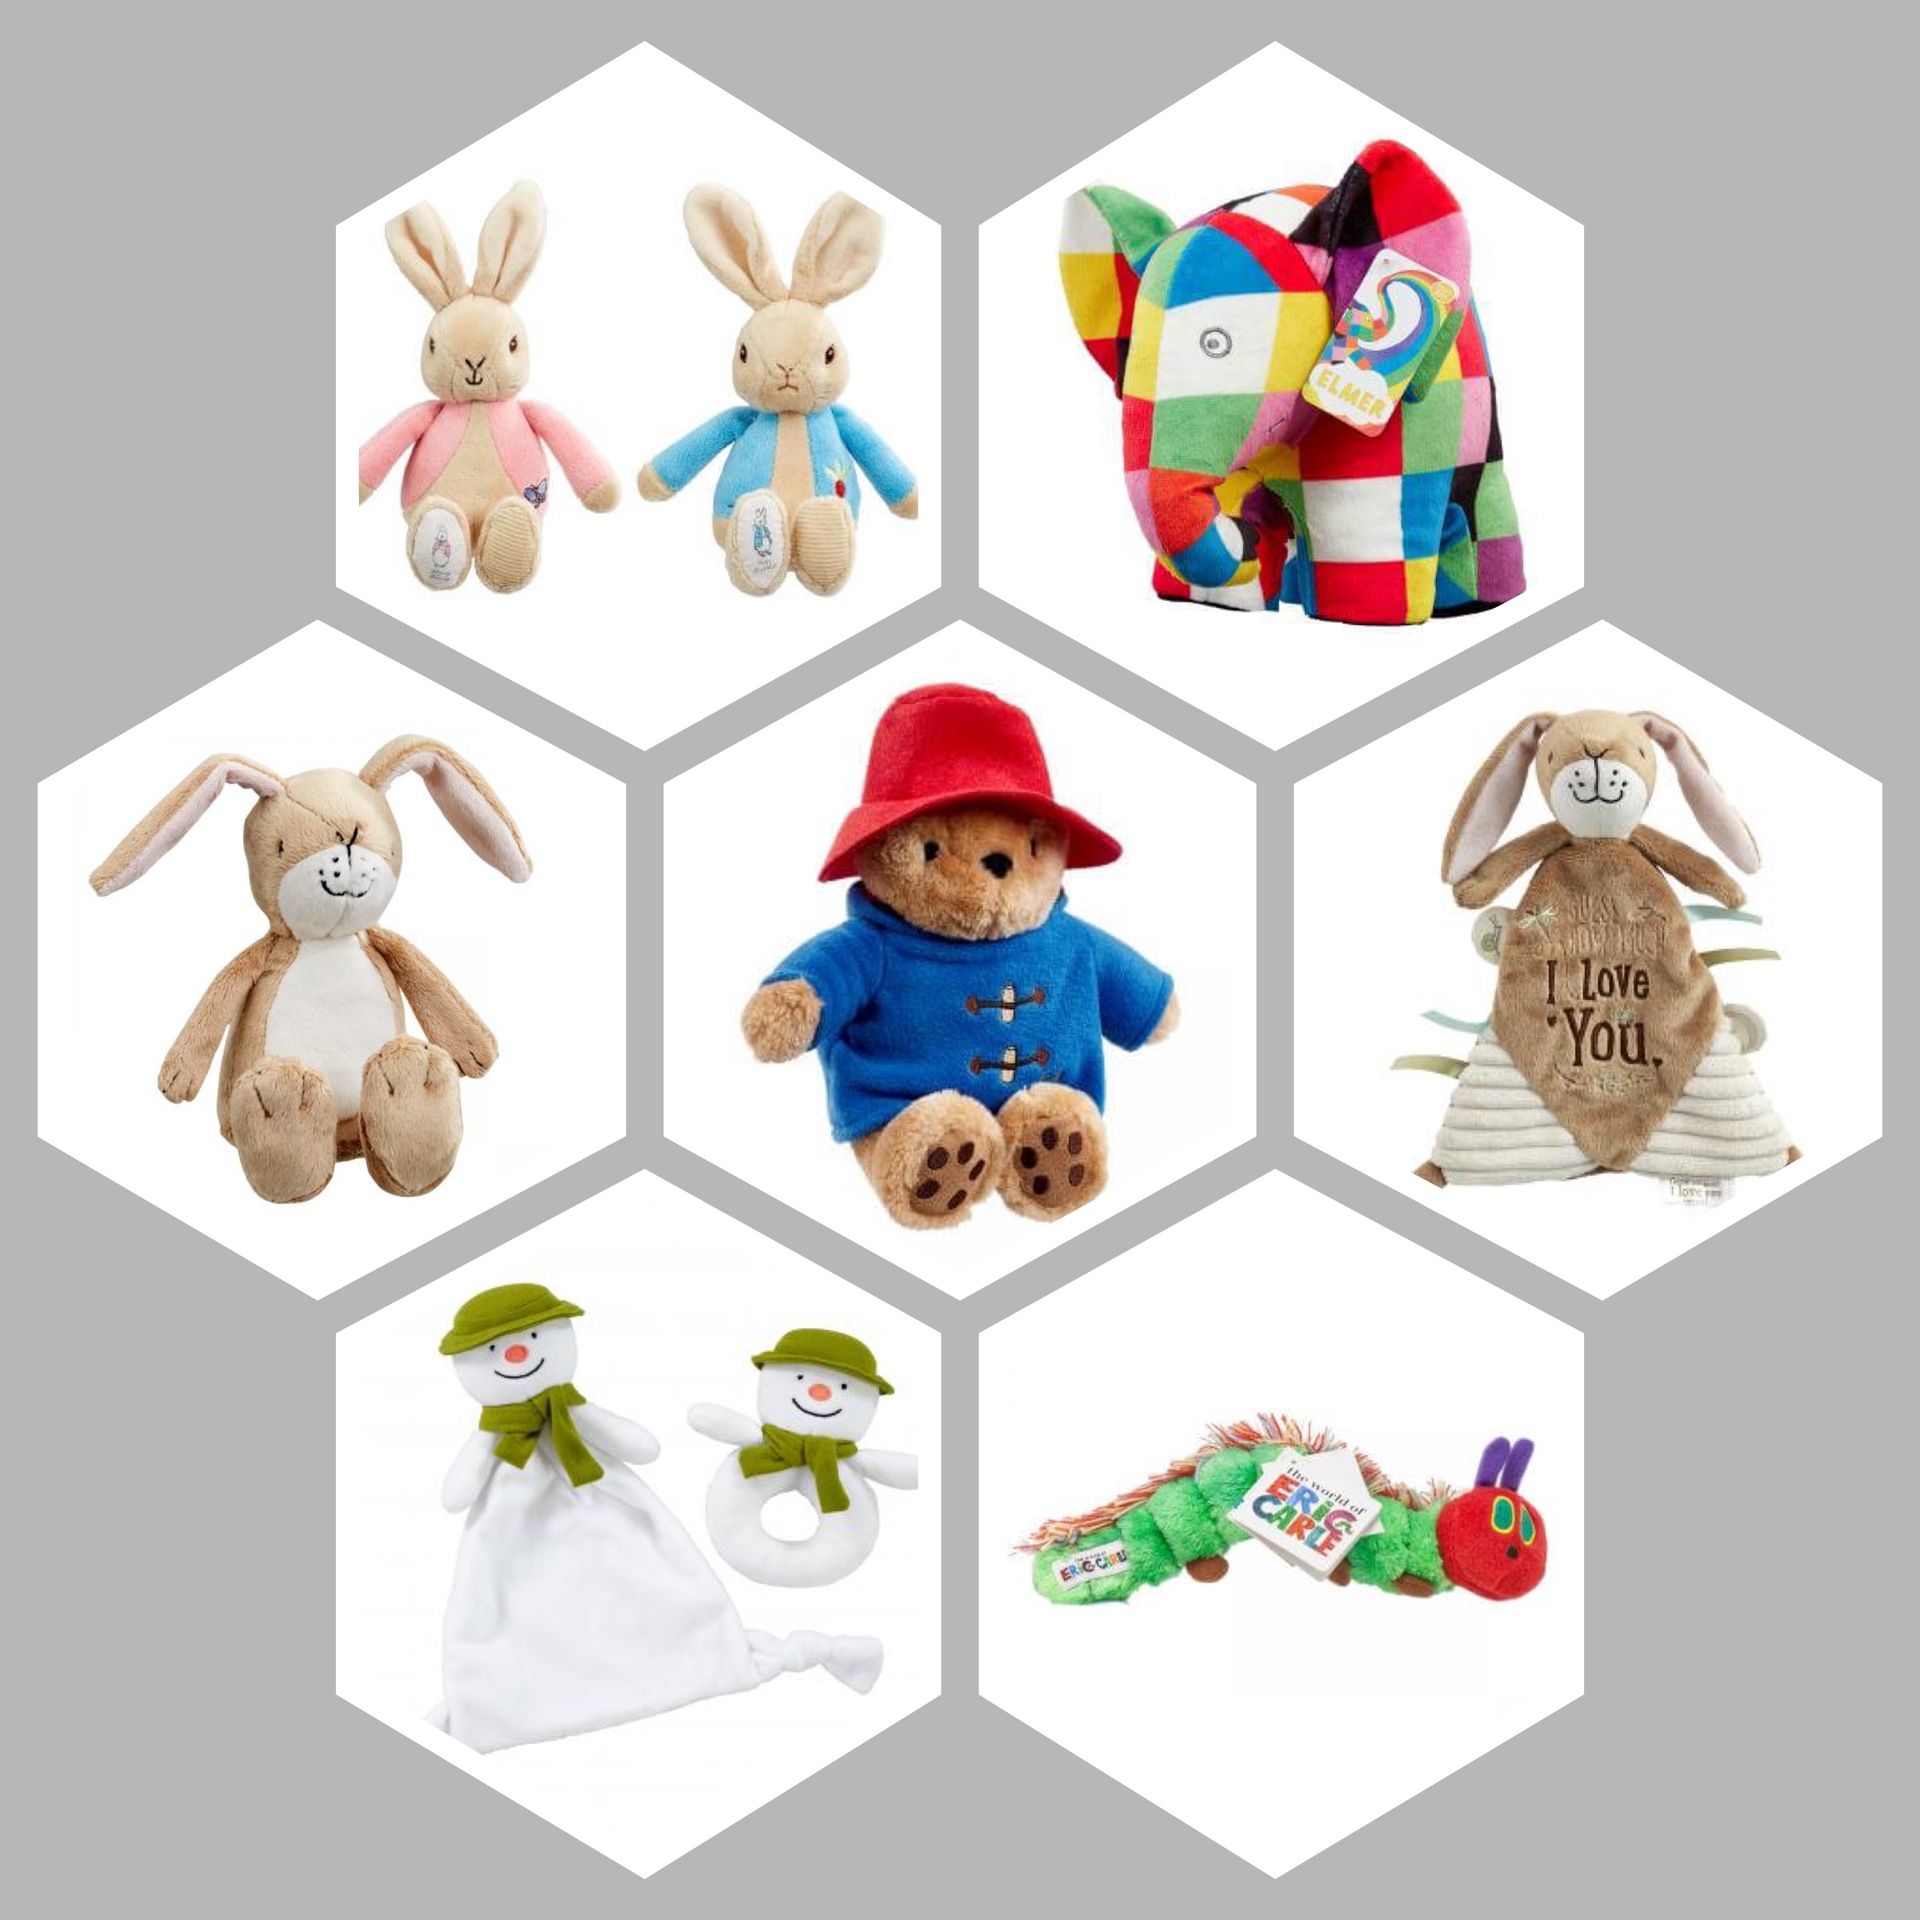 Rainbow Designs character toys -  paddington pooh elmer